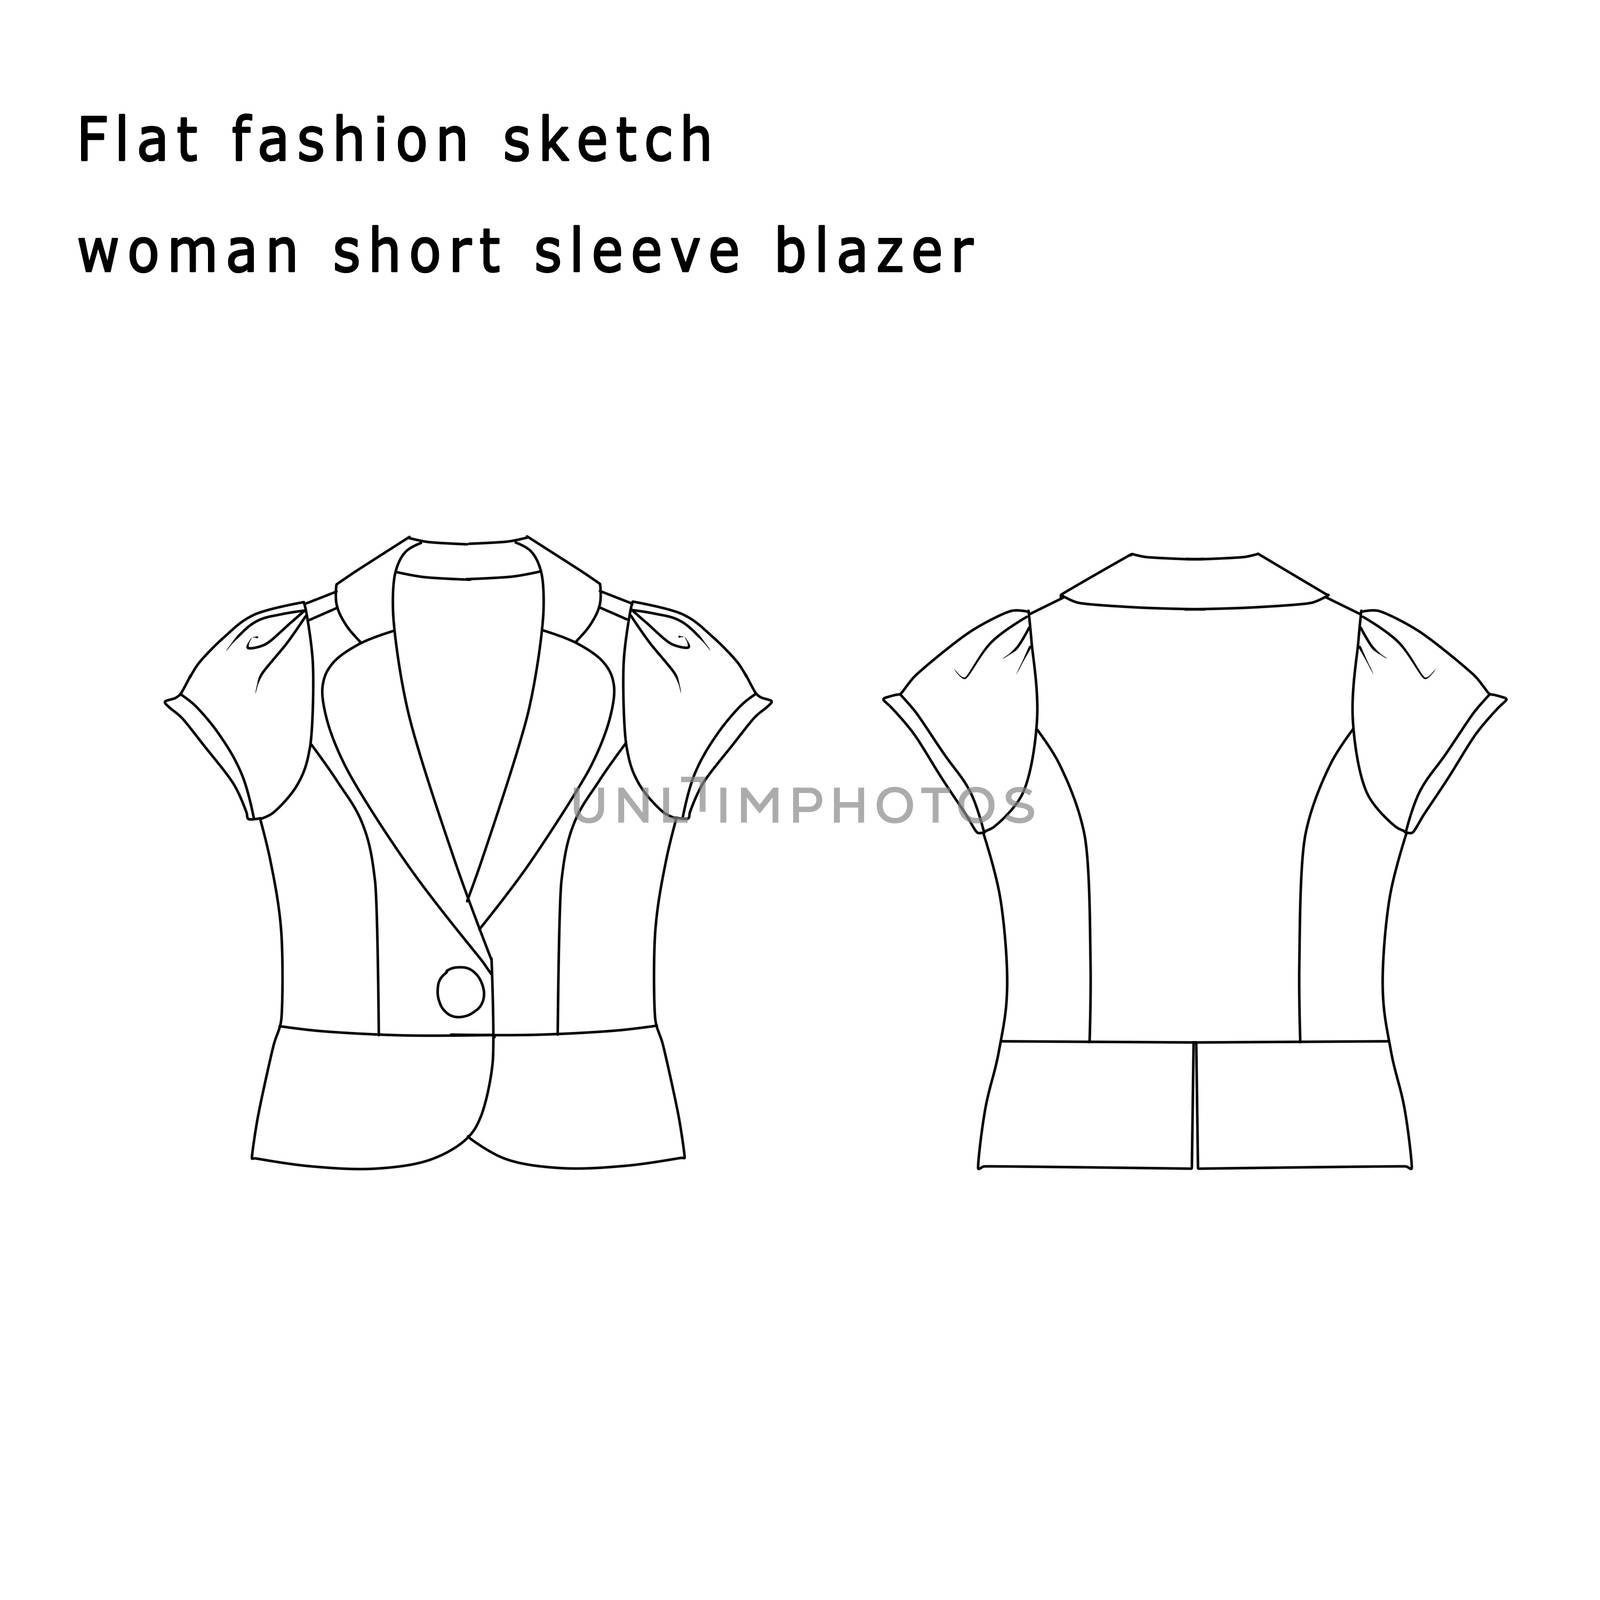 Fashion Illustration - Fashion Flat template - Woman short Blazer by GGillustrations